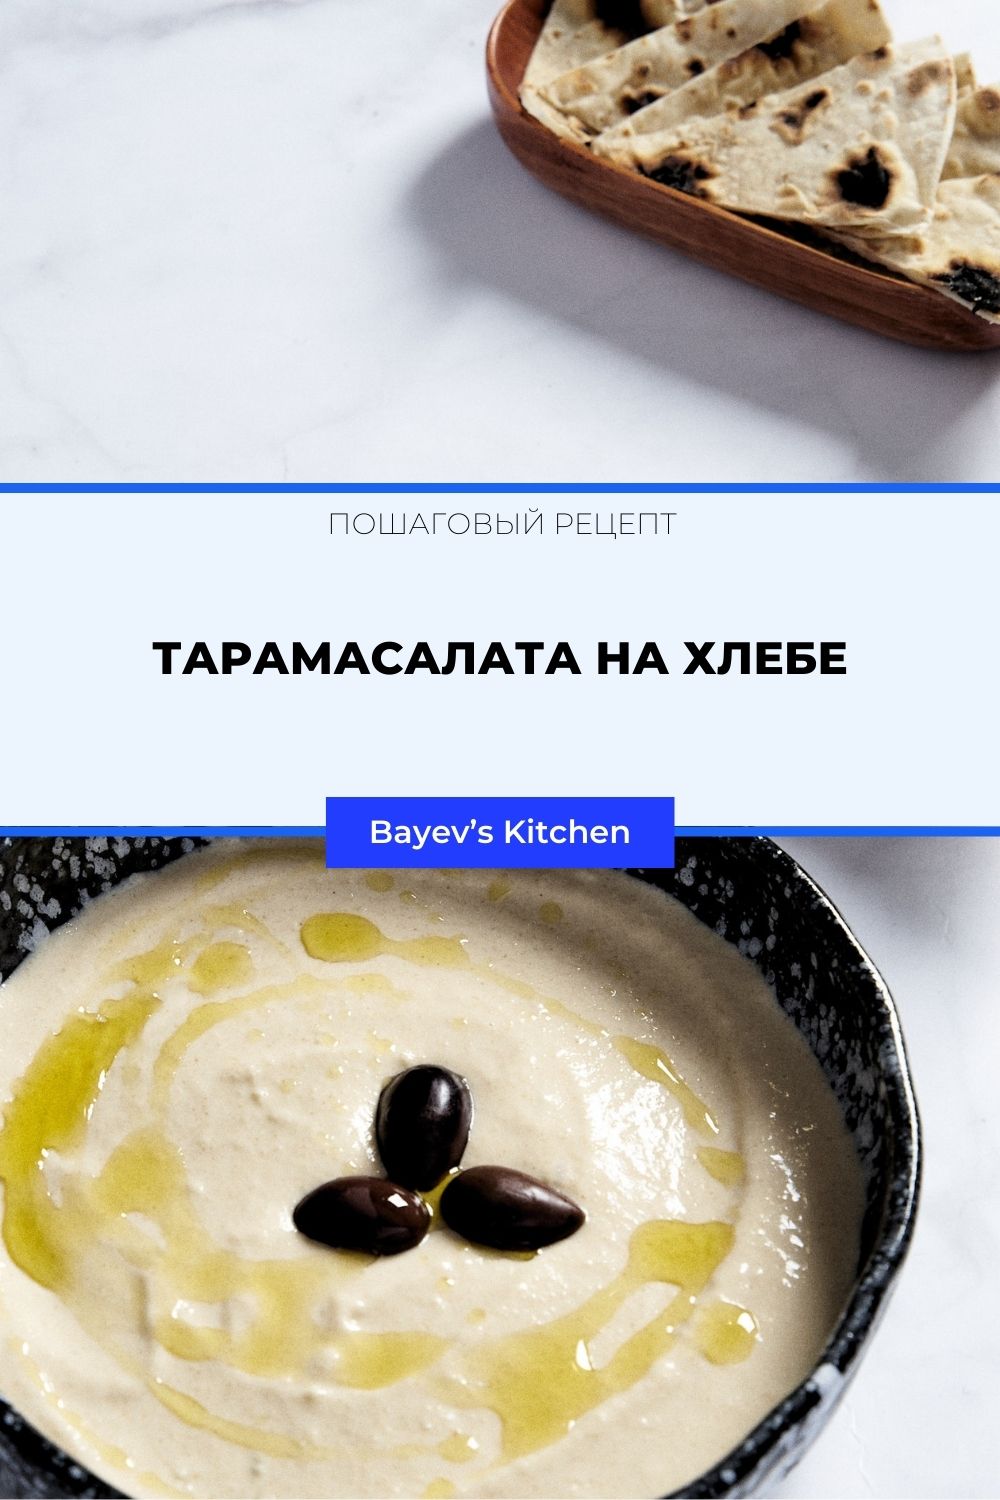 Тарамасалата - греческая намазка из икры трески пошаговый рецепт с фото от BayevsKitchen